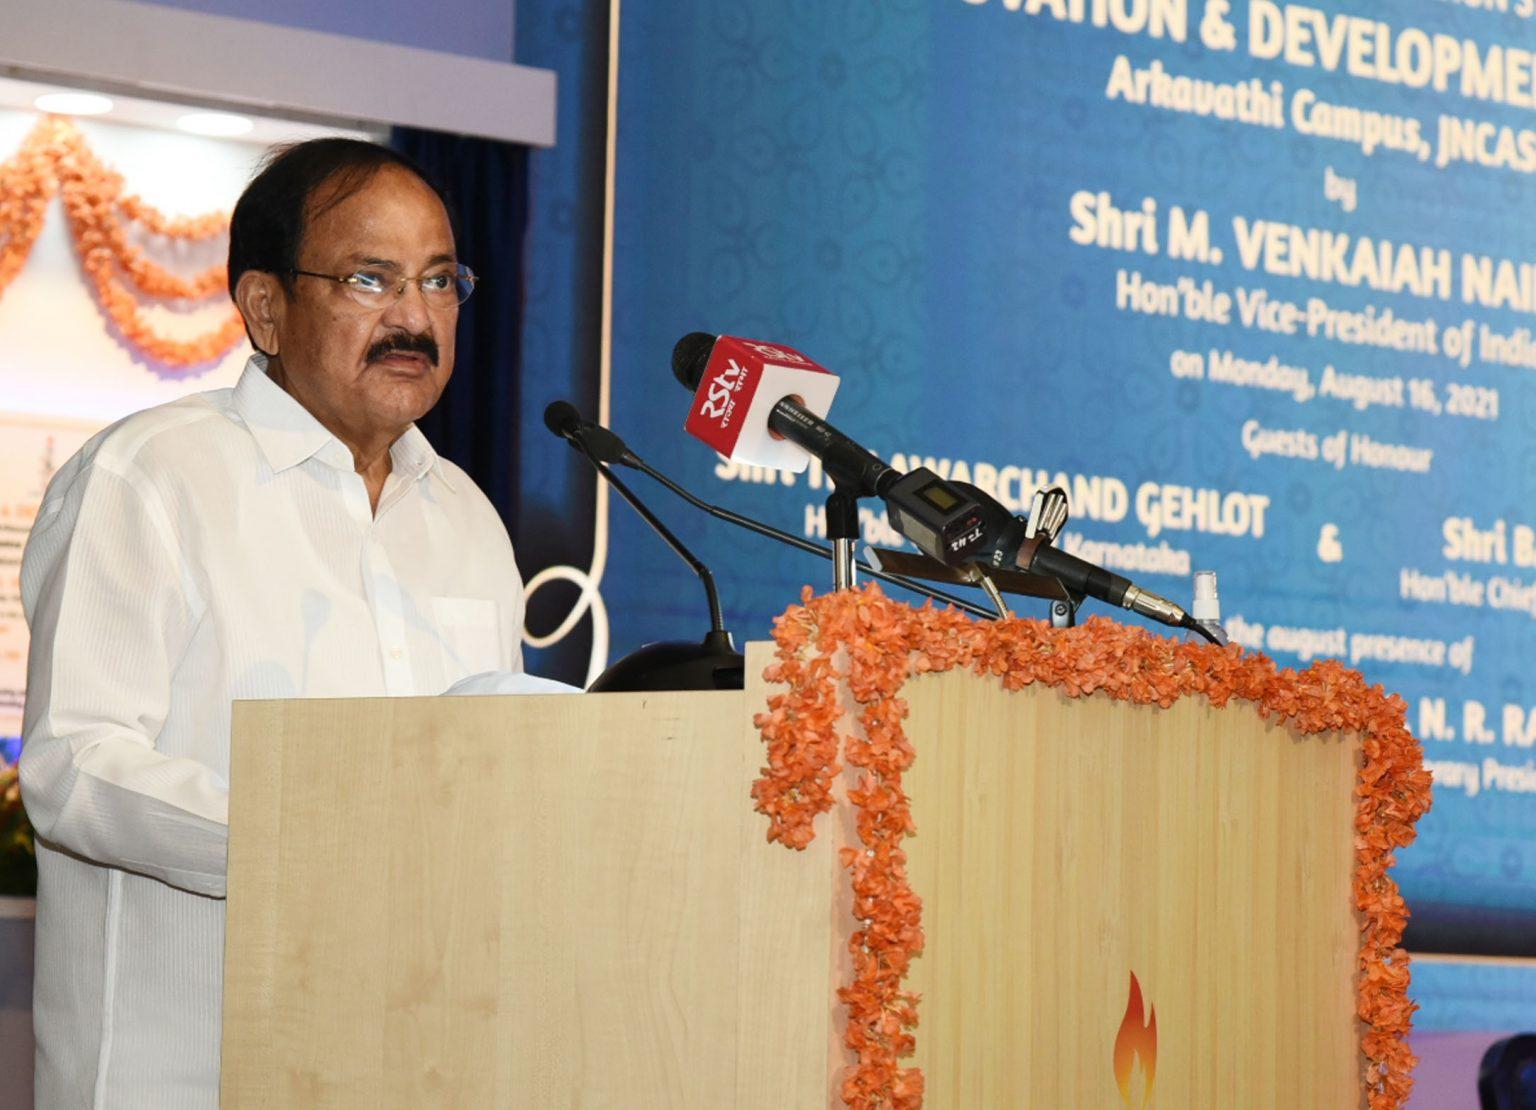 Venkaiah Naidu laid foundation stone of Innovation and Development Centre | ভেঙ্কাইয়া নাইডু ইনোভেশন ও ডেভেলপমেন্ট সেন্টারের ভিত্তিপ্রস্তর স্থাপন করলেন_30.1